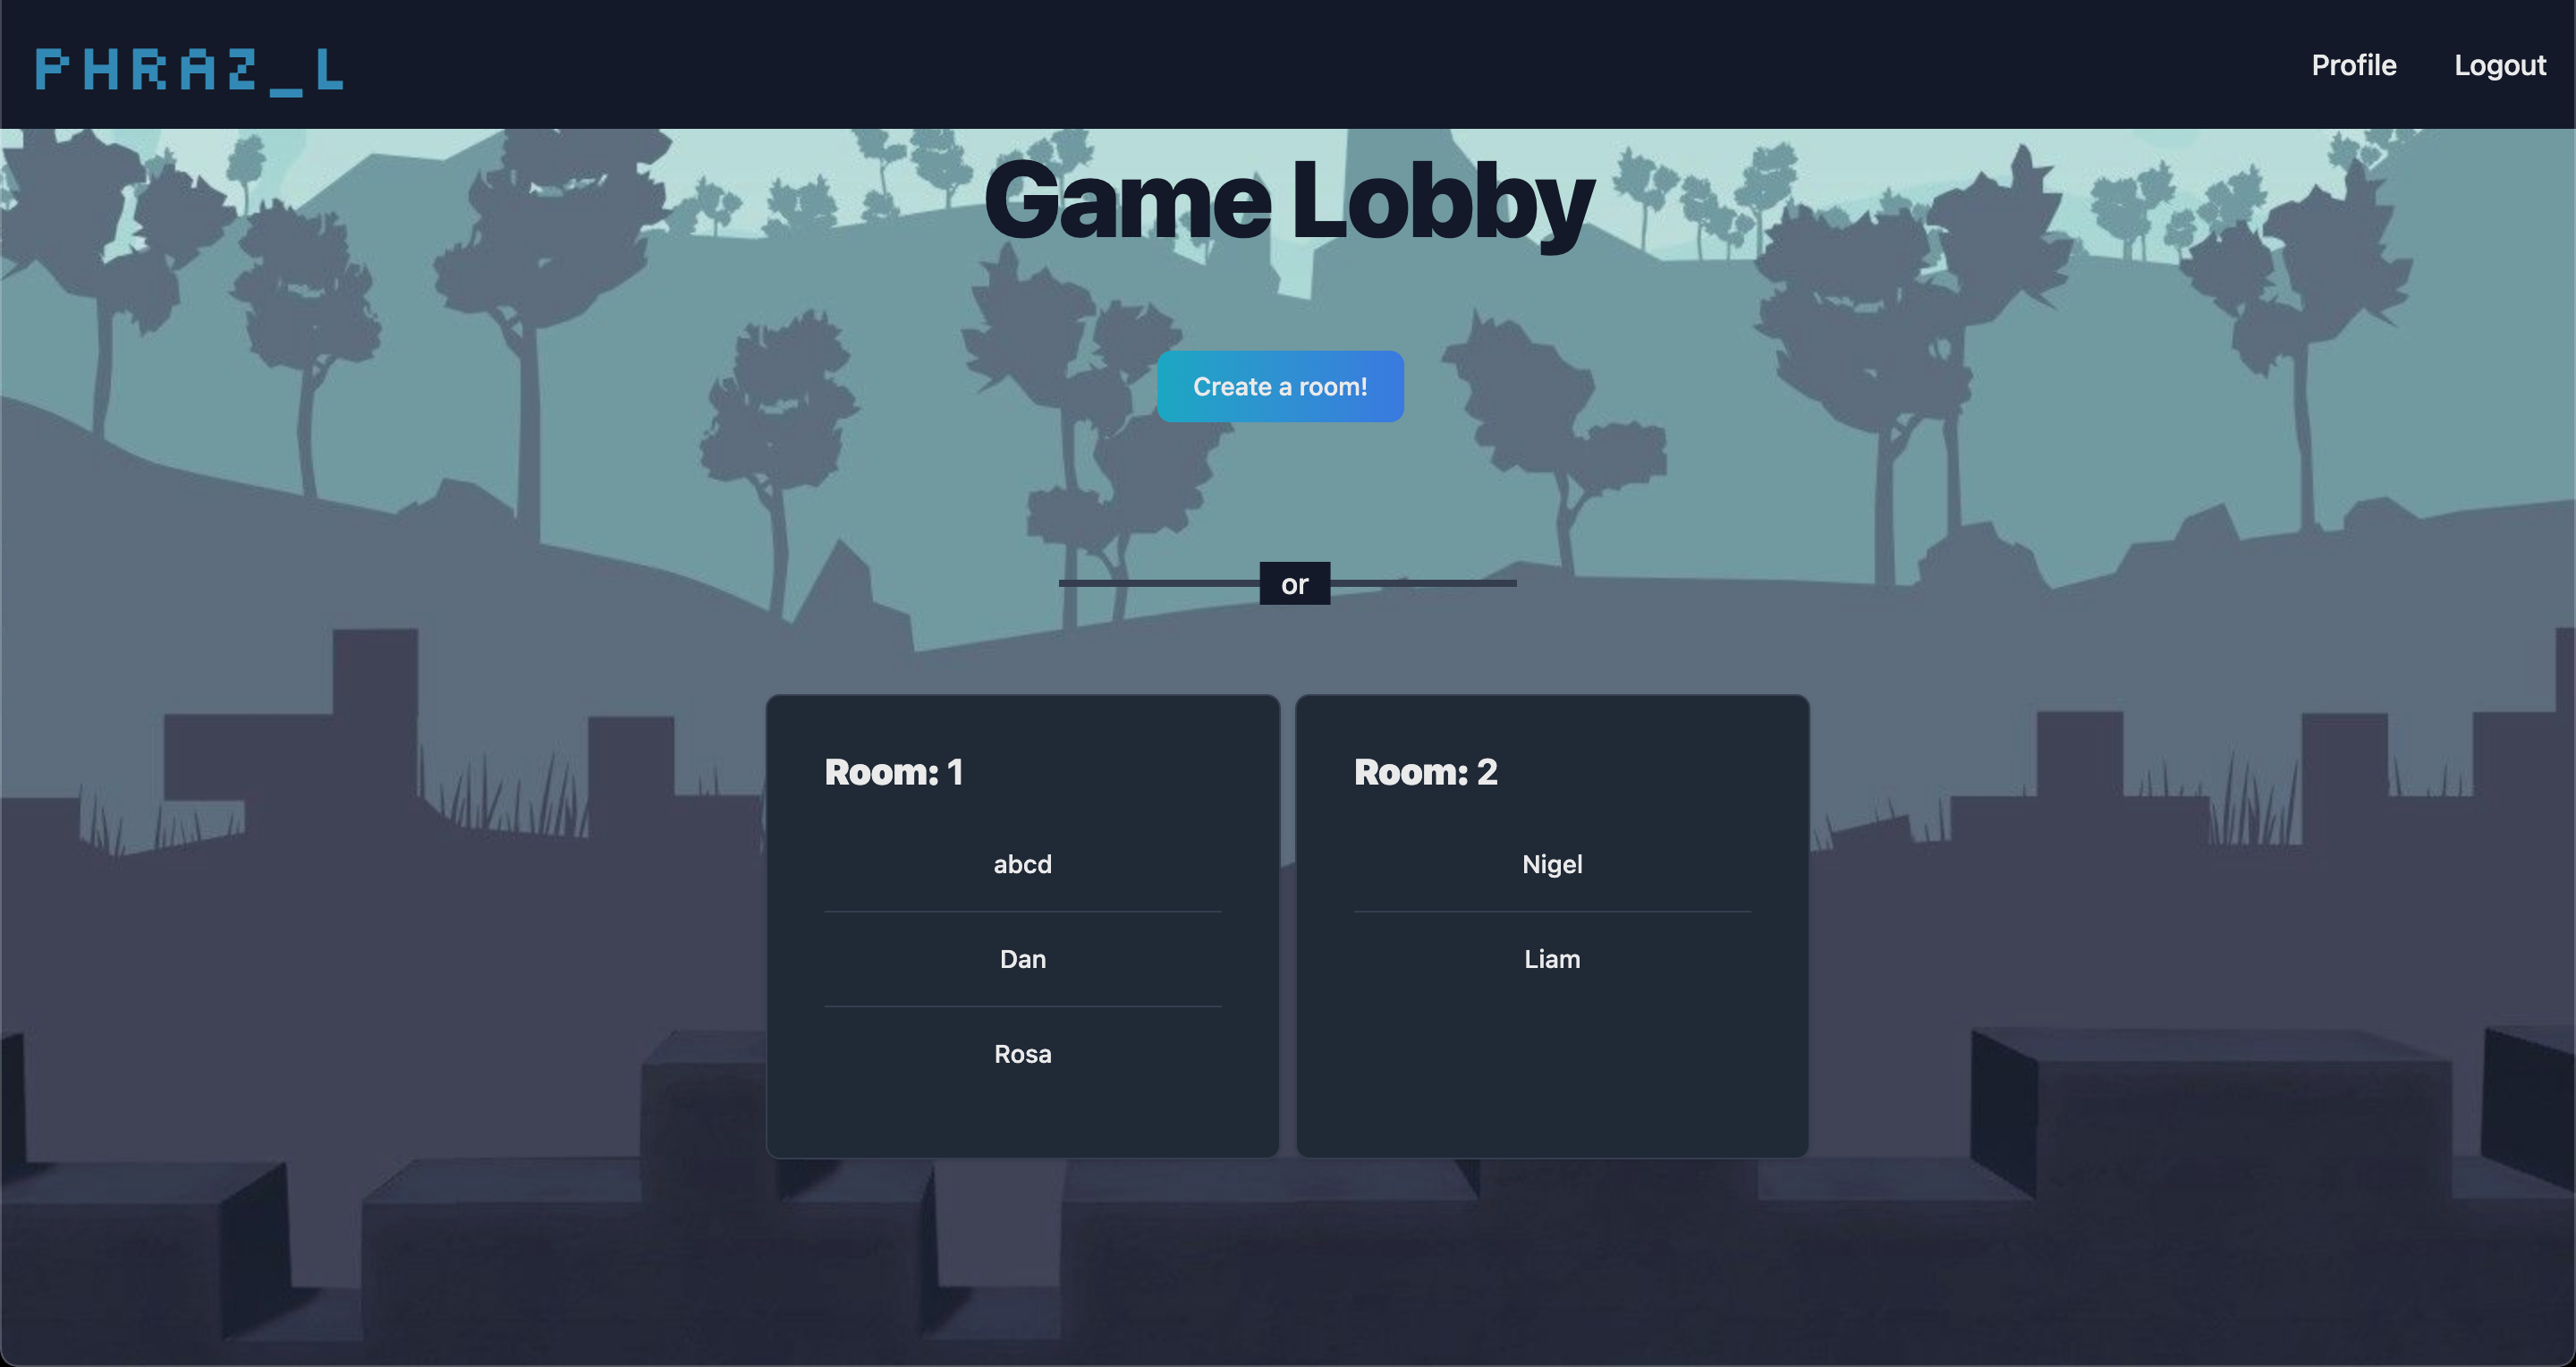 Game lobby image